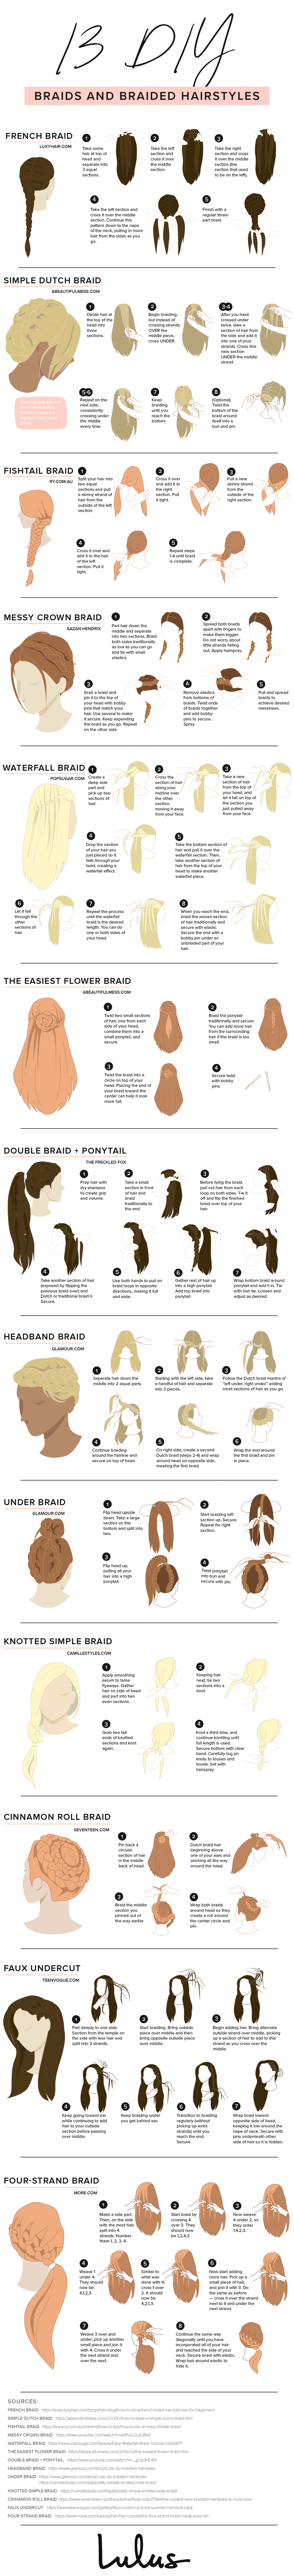 13 DIY Bid Braided Hairstyles